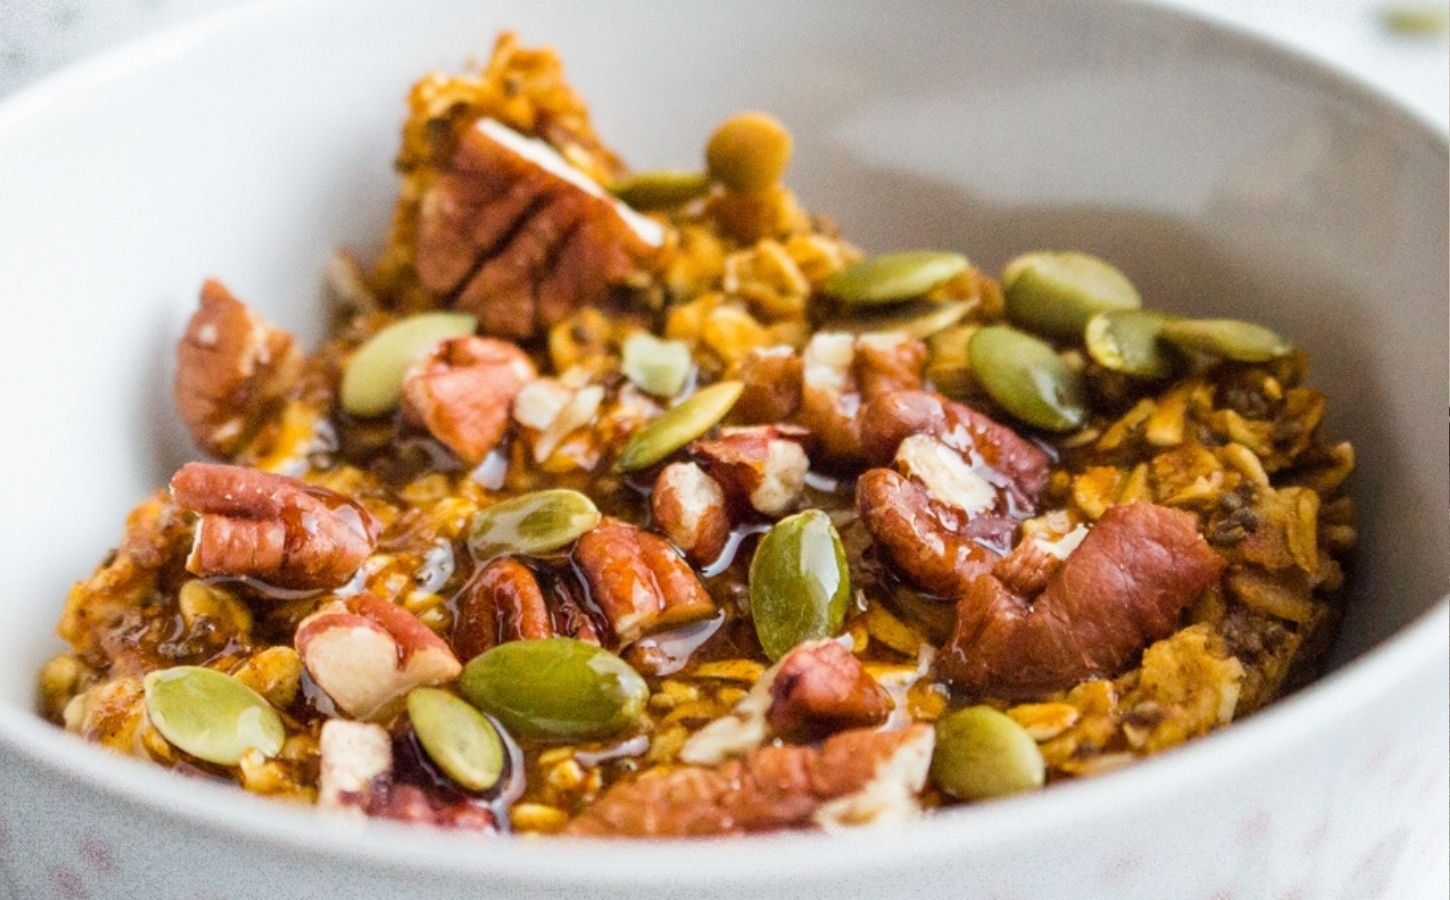 Pumpkin baked oat meal, a perfect fall recipe idea